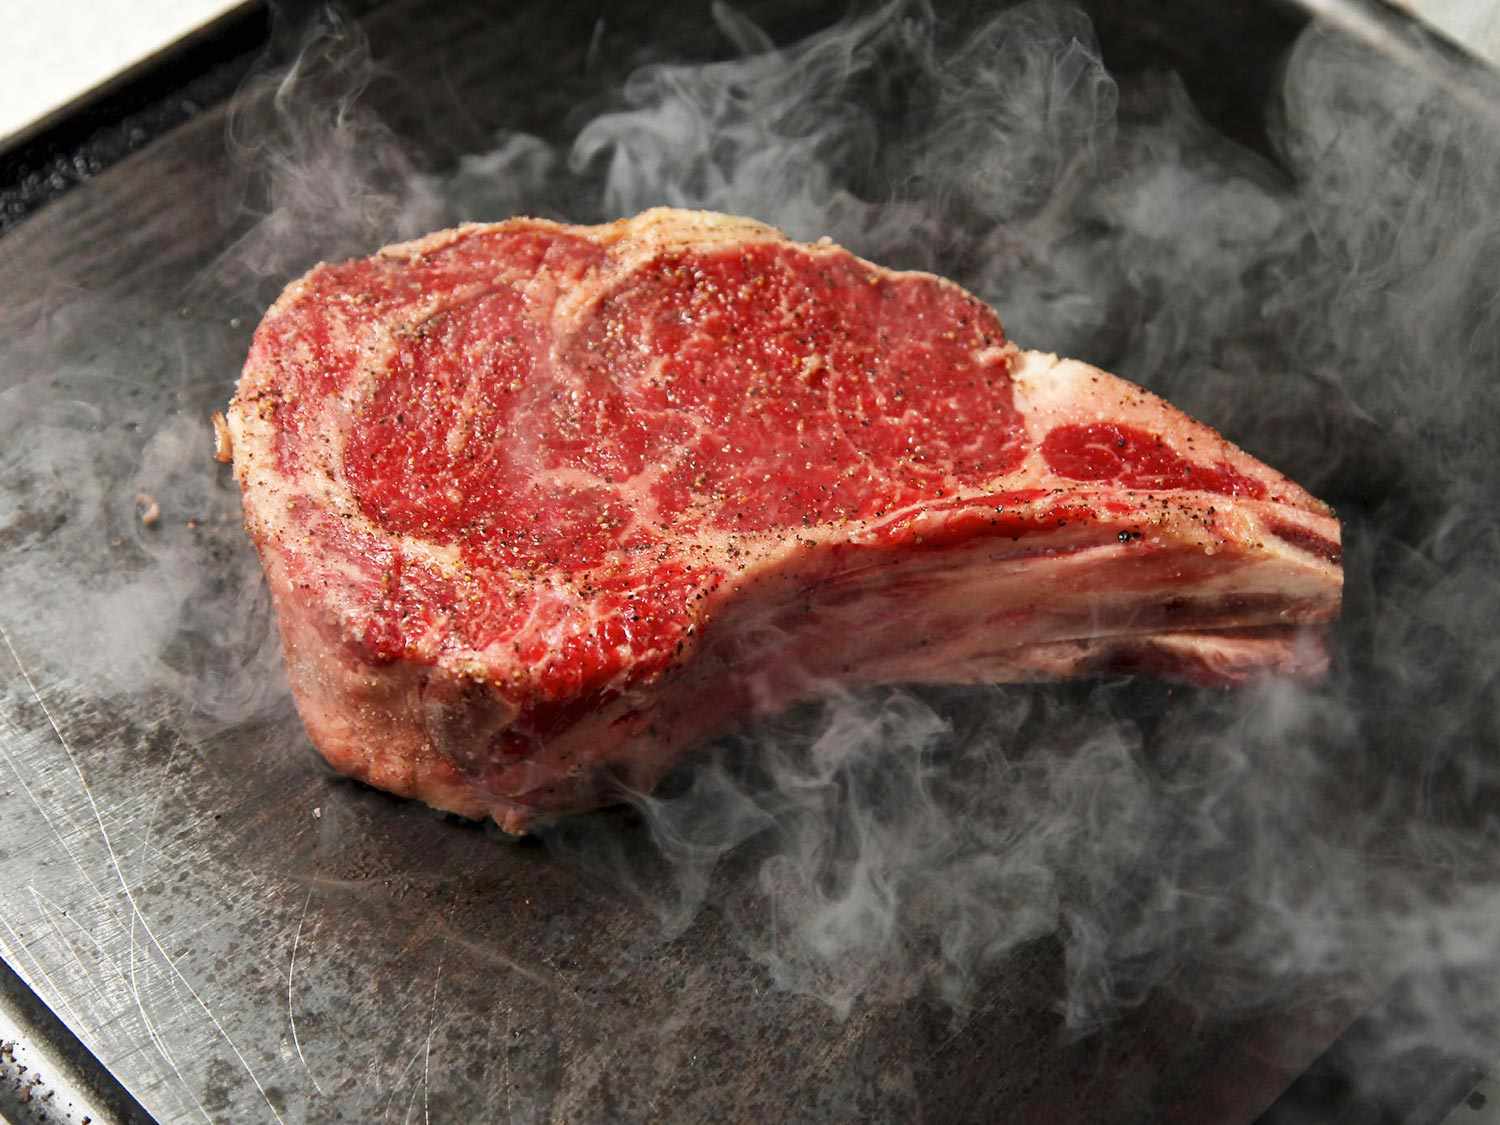 Steak on the baking steel griddle